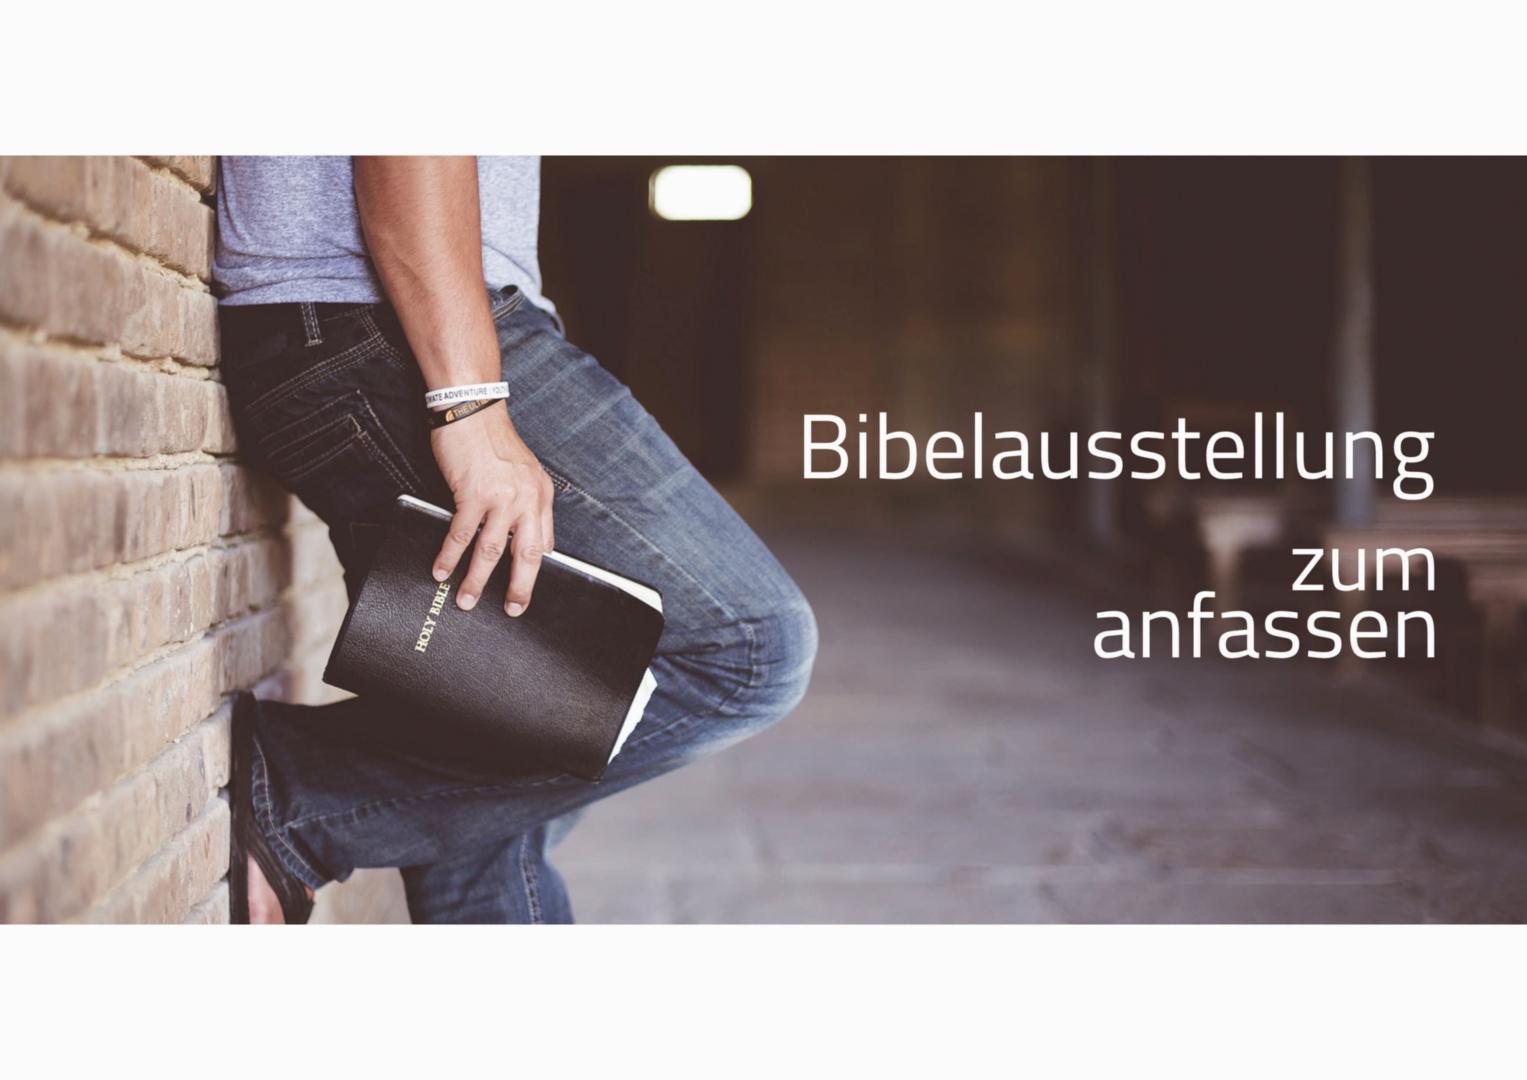 Bibel (c) Pixabay